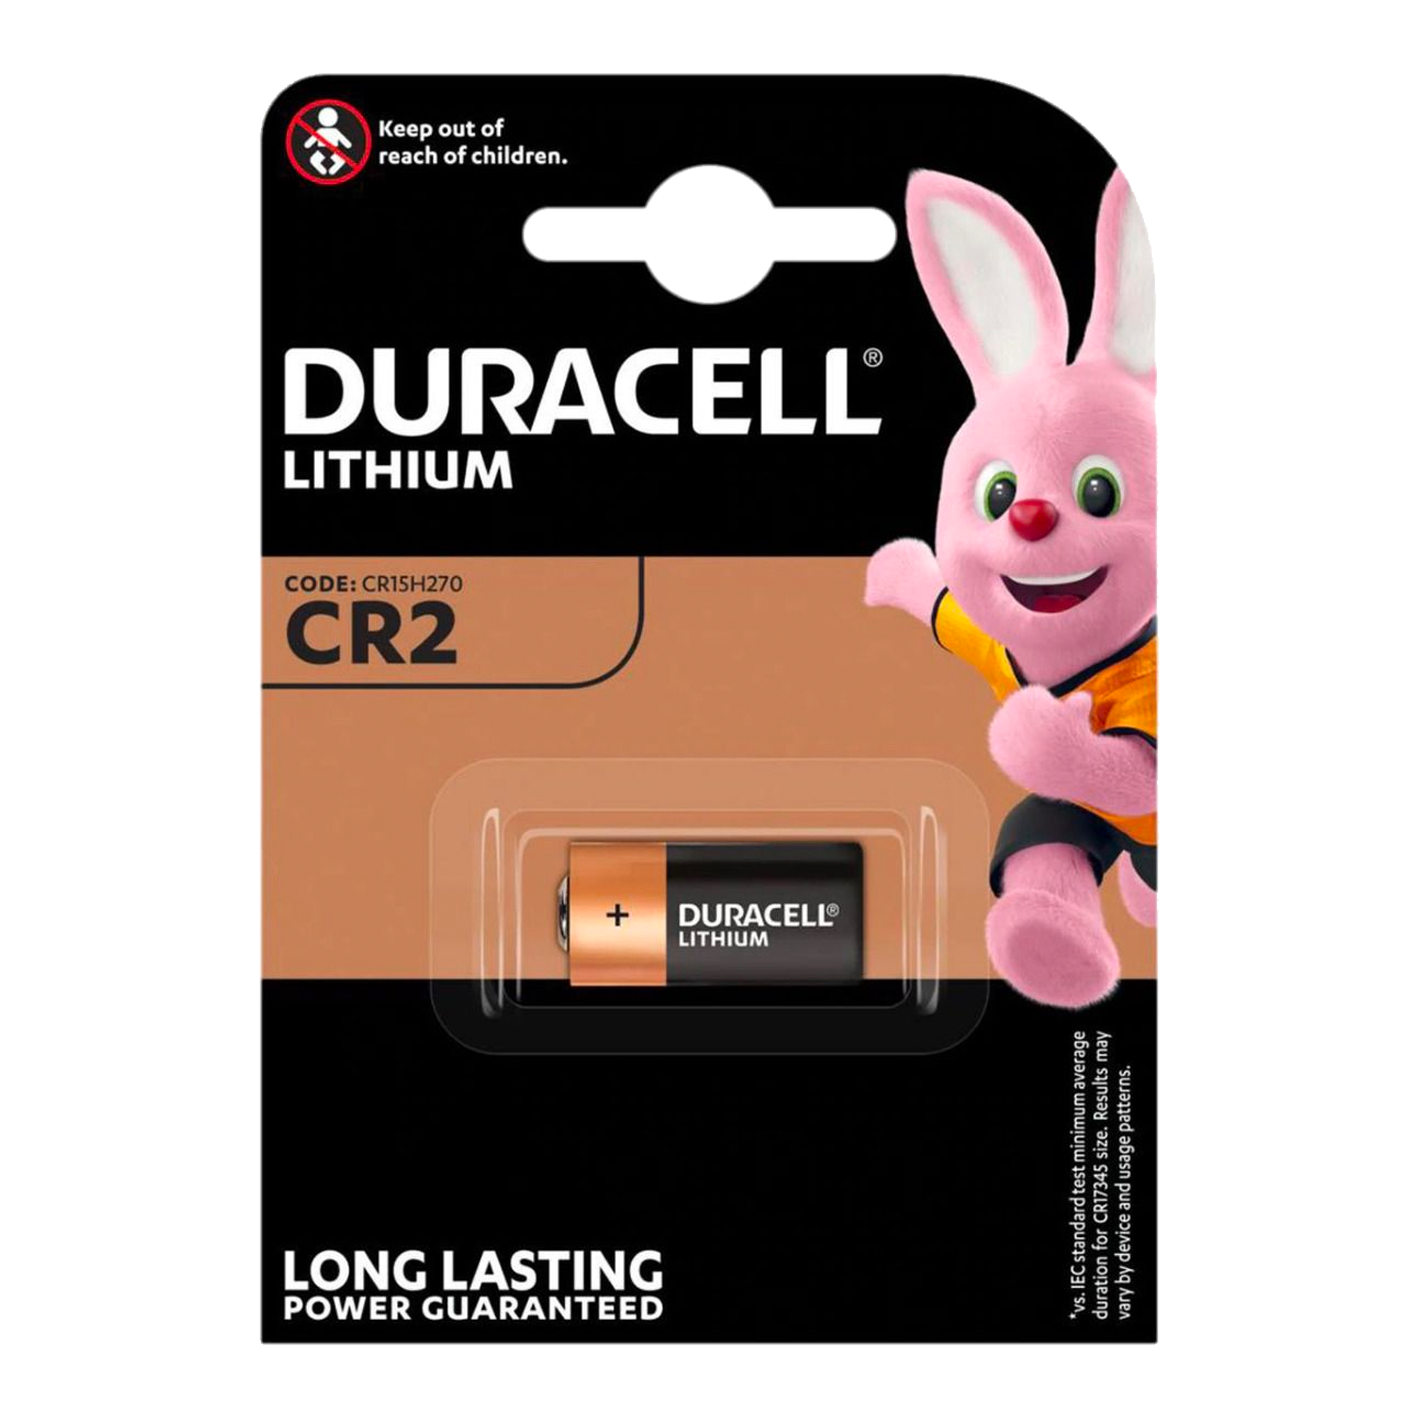 Duracell Ultra High Power Lithium Battery, CR2, 3V